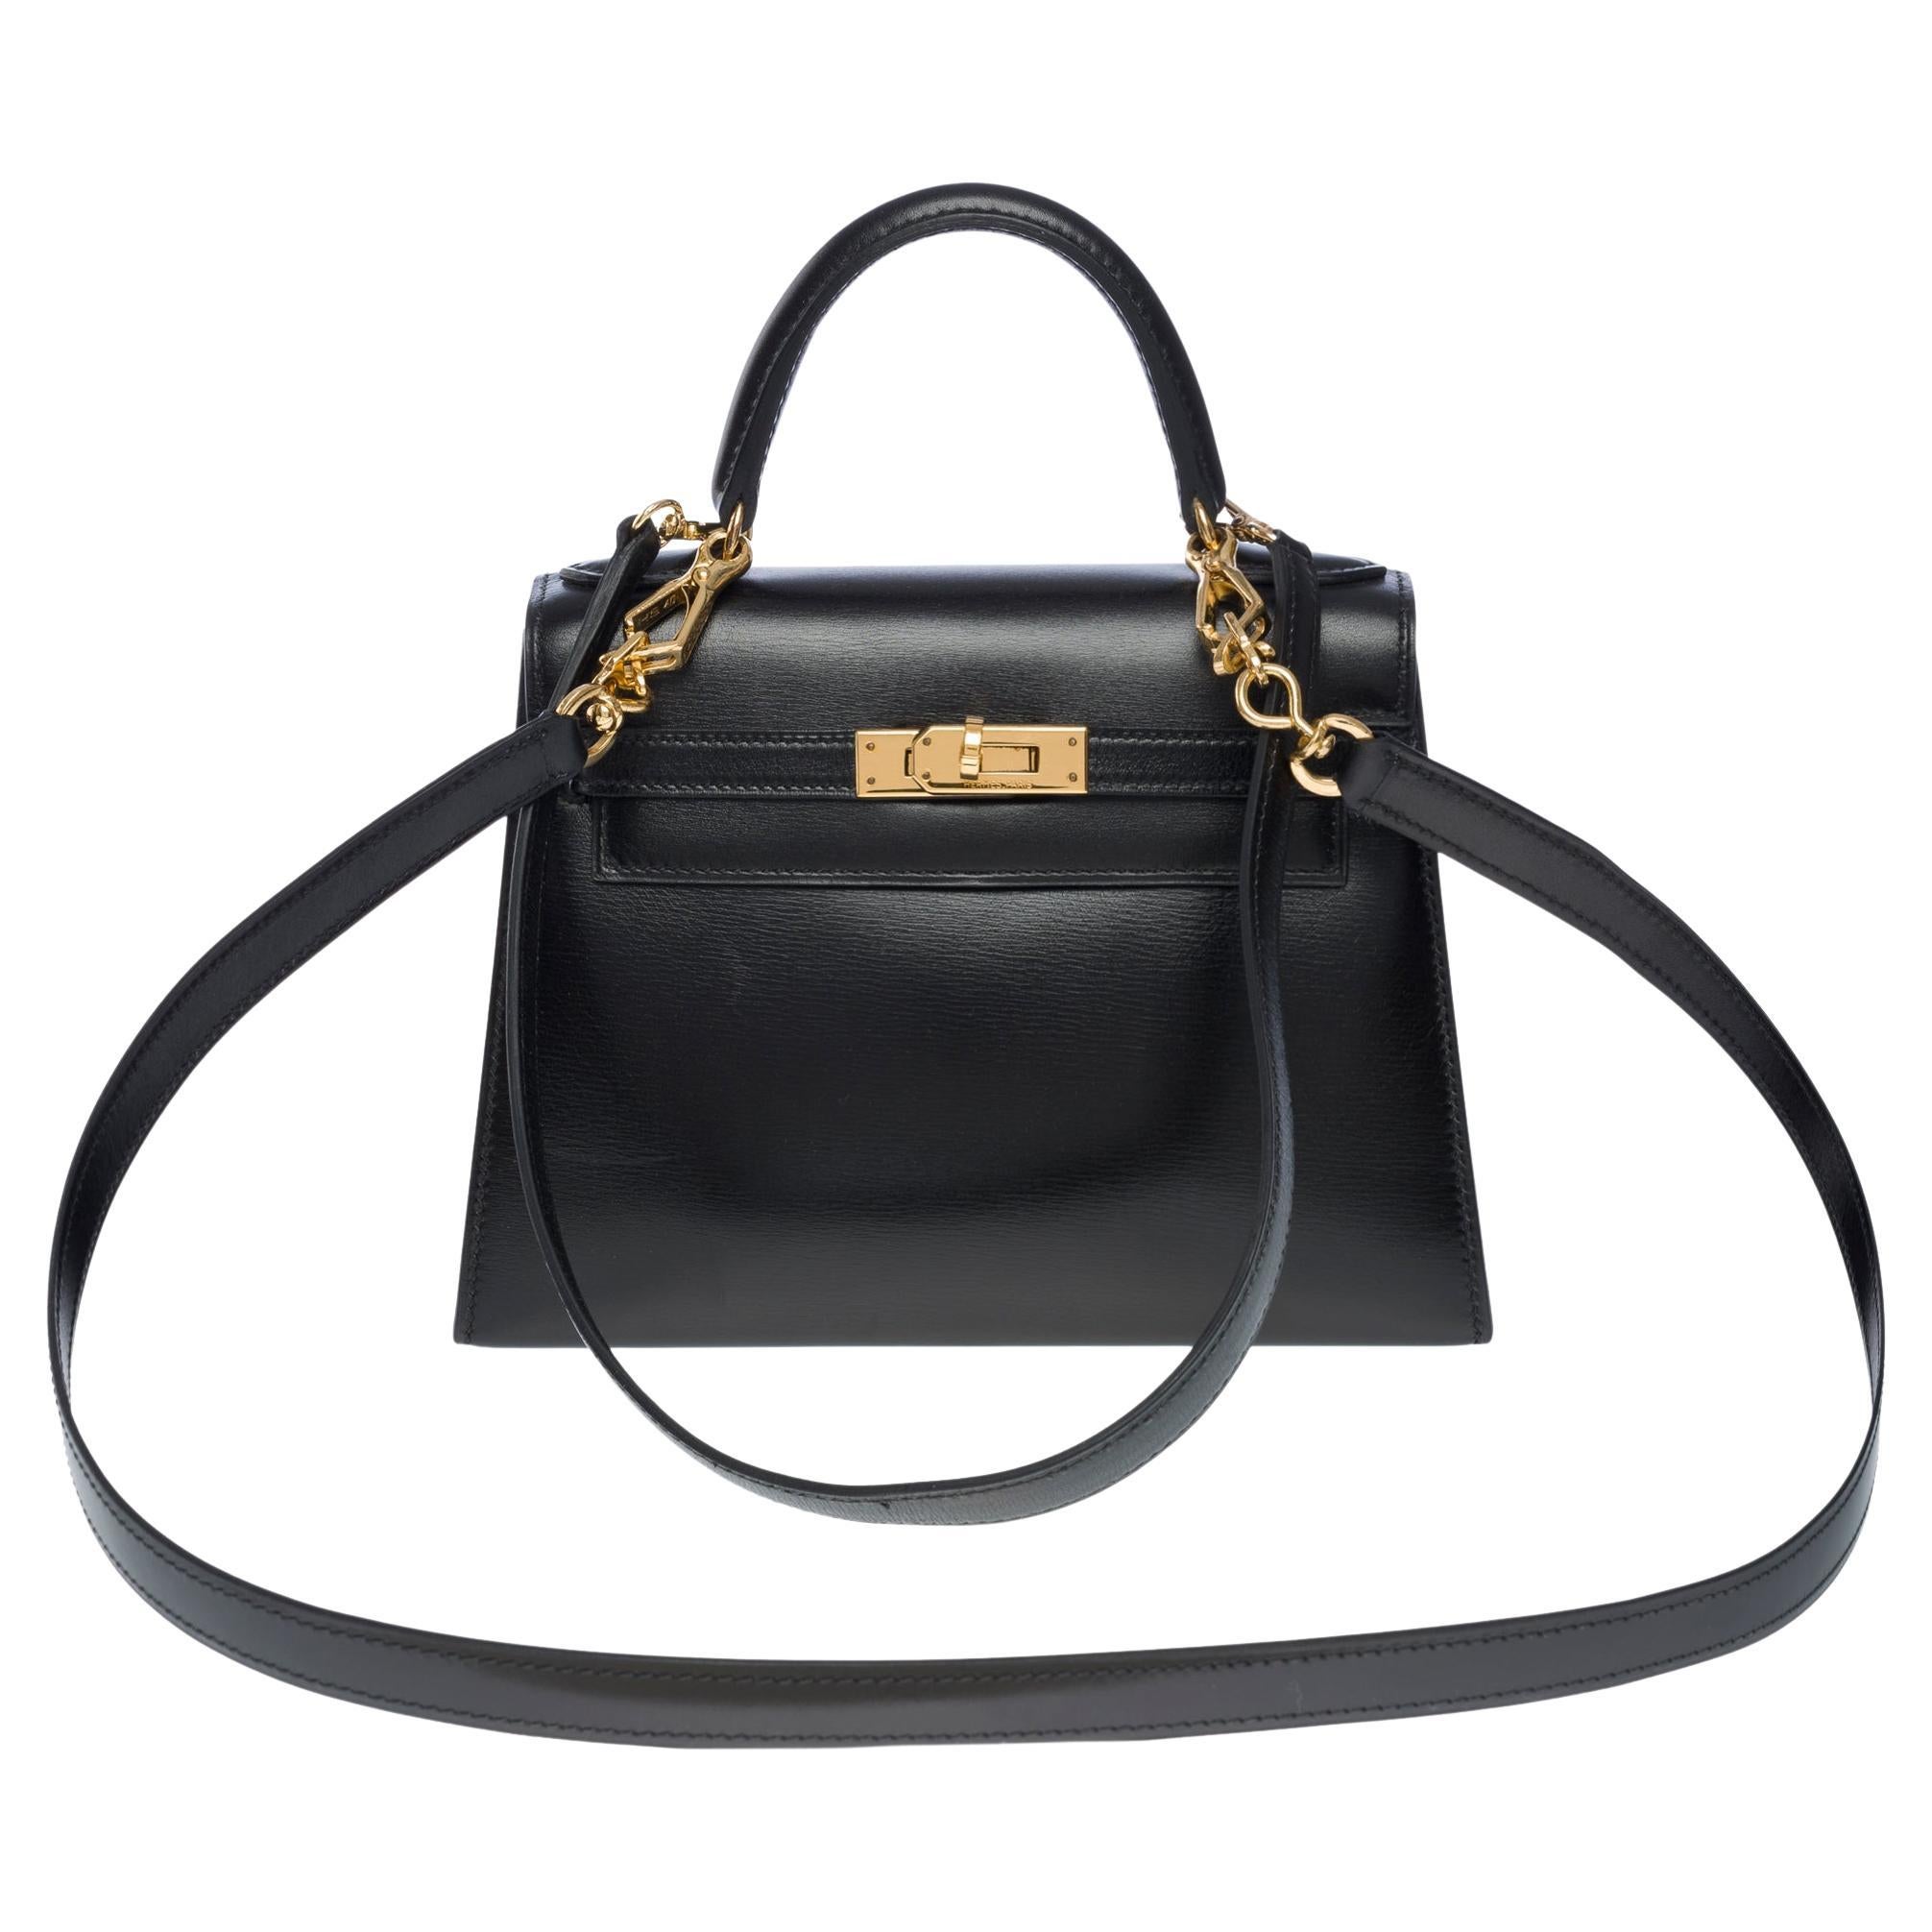 Rare Hermès Mini Kelly 20cm handbag double strap in black box calfskin, GHW